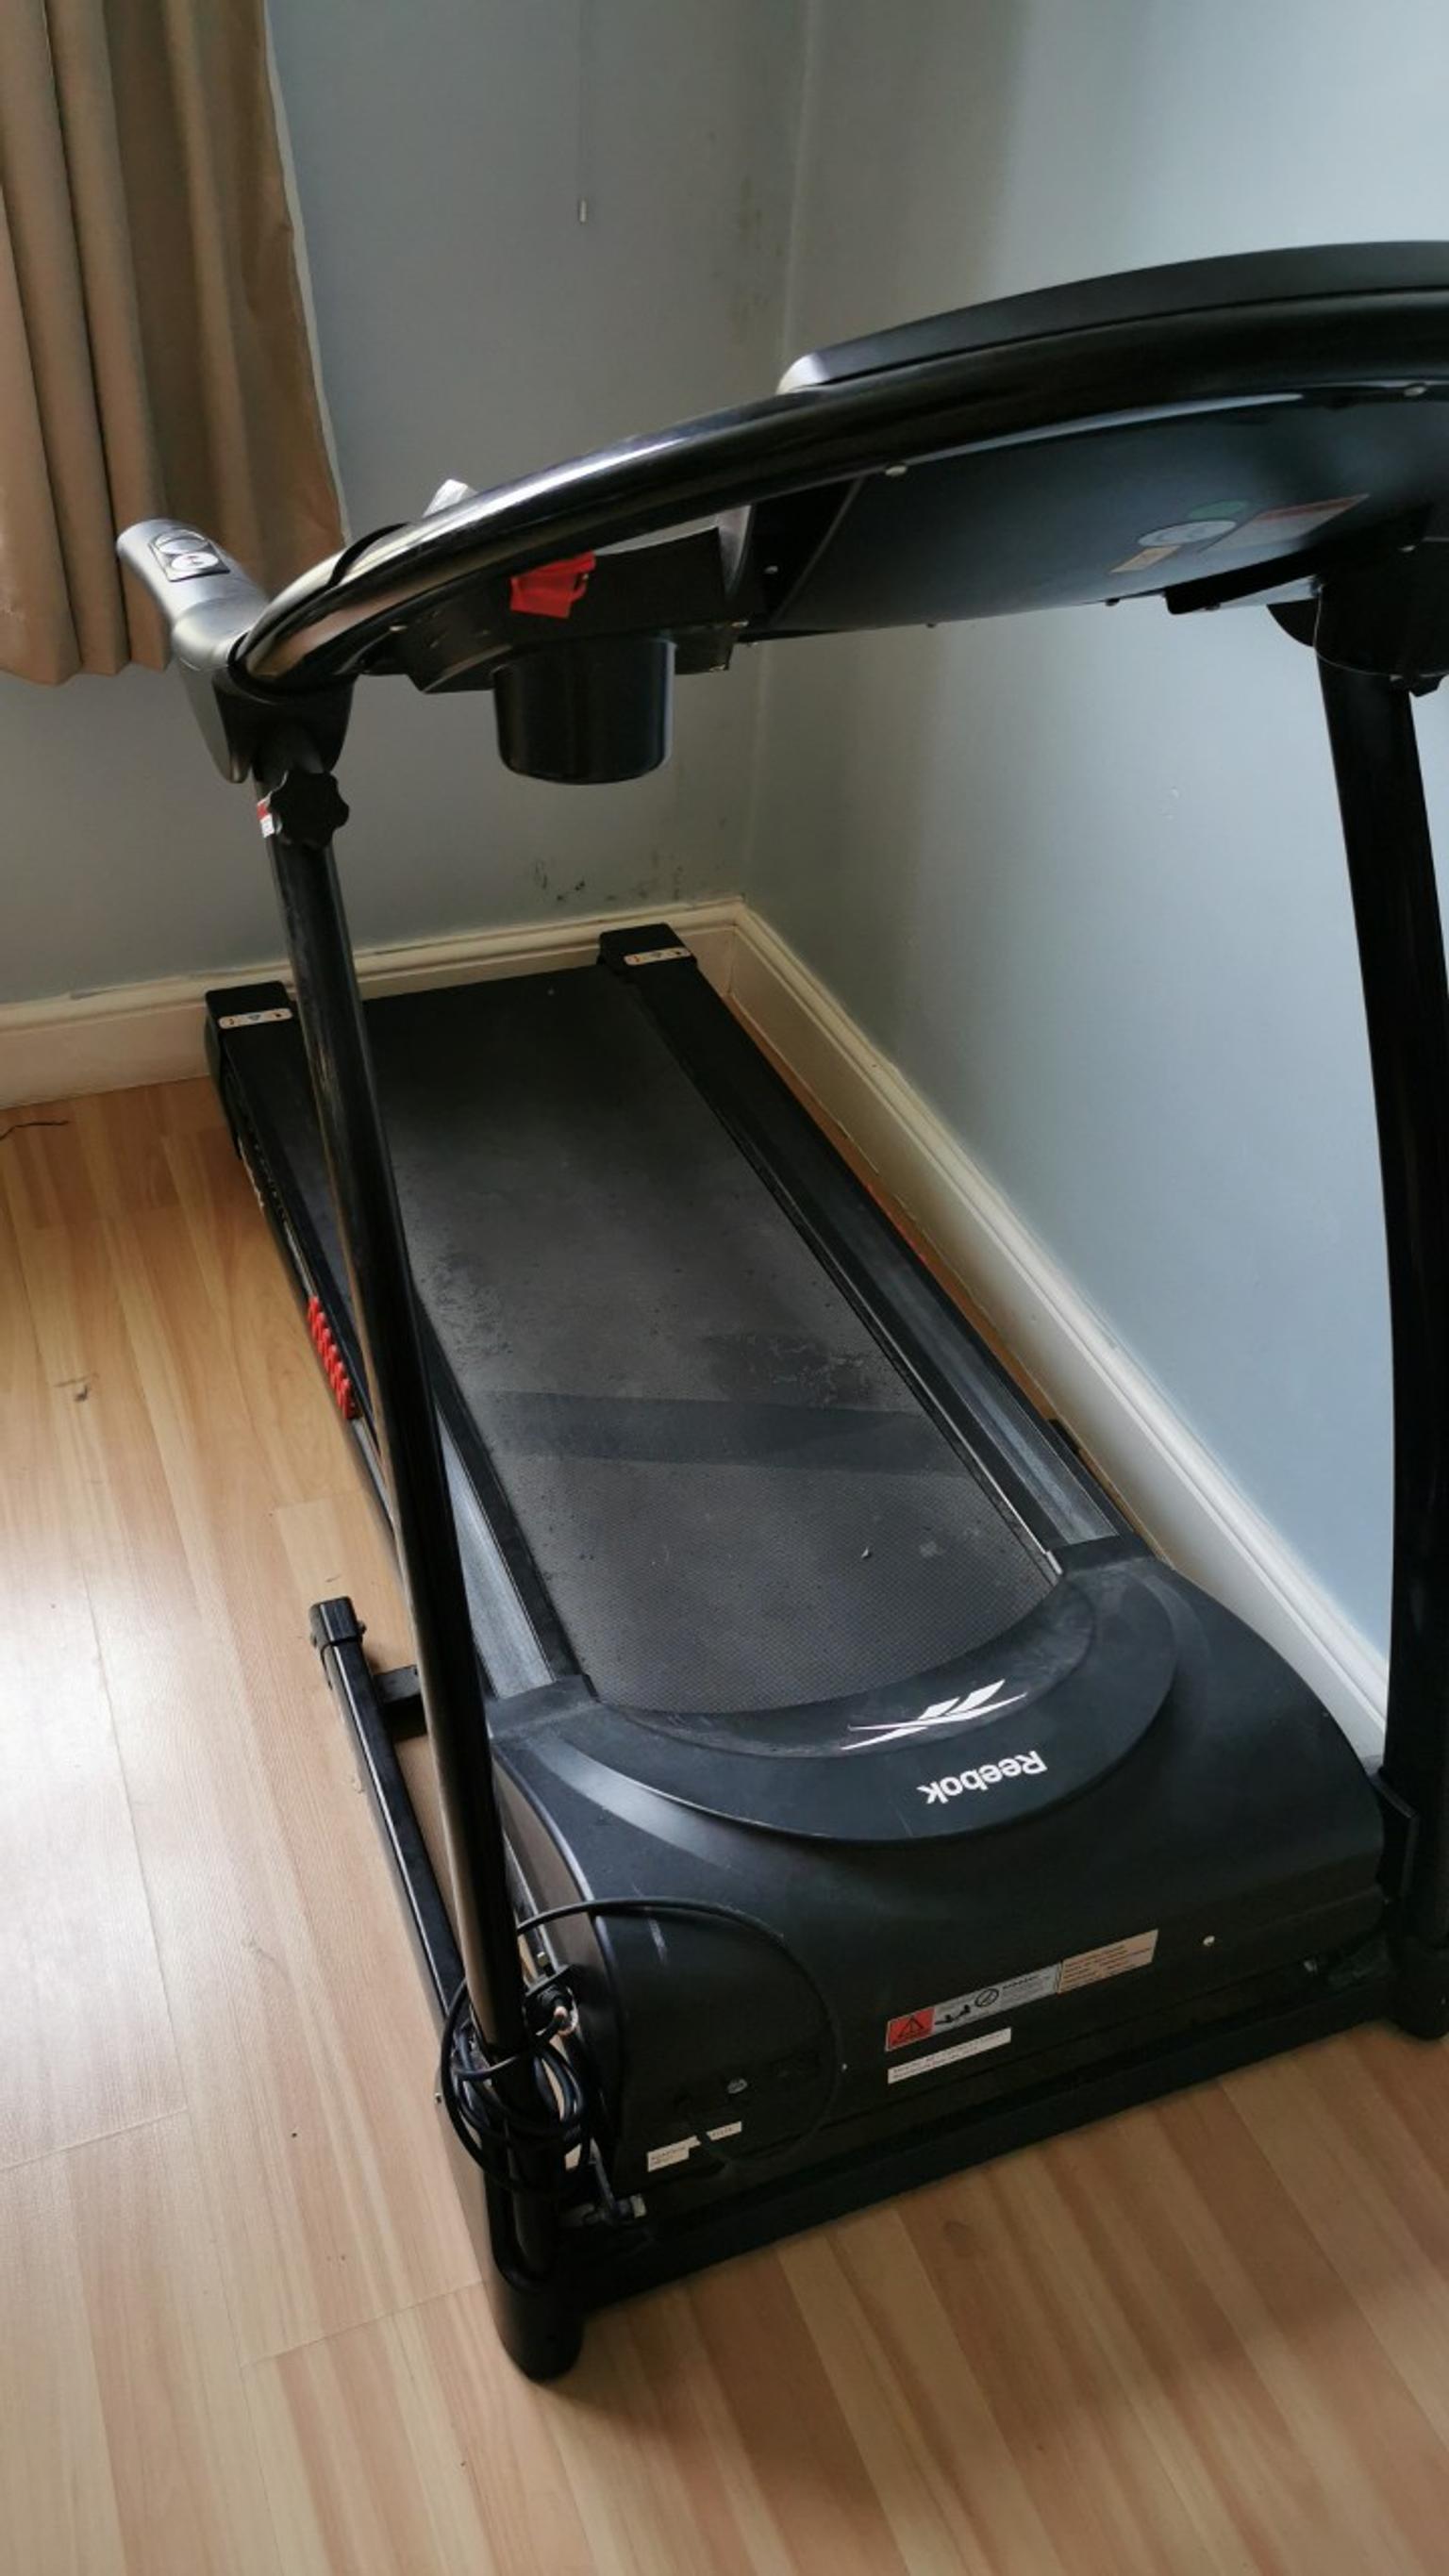 reebok z9 run treadmill